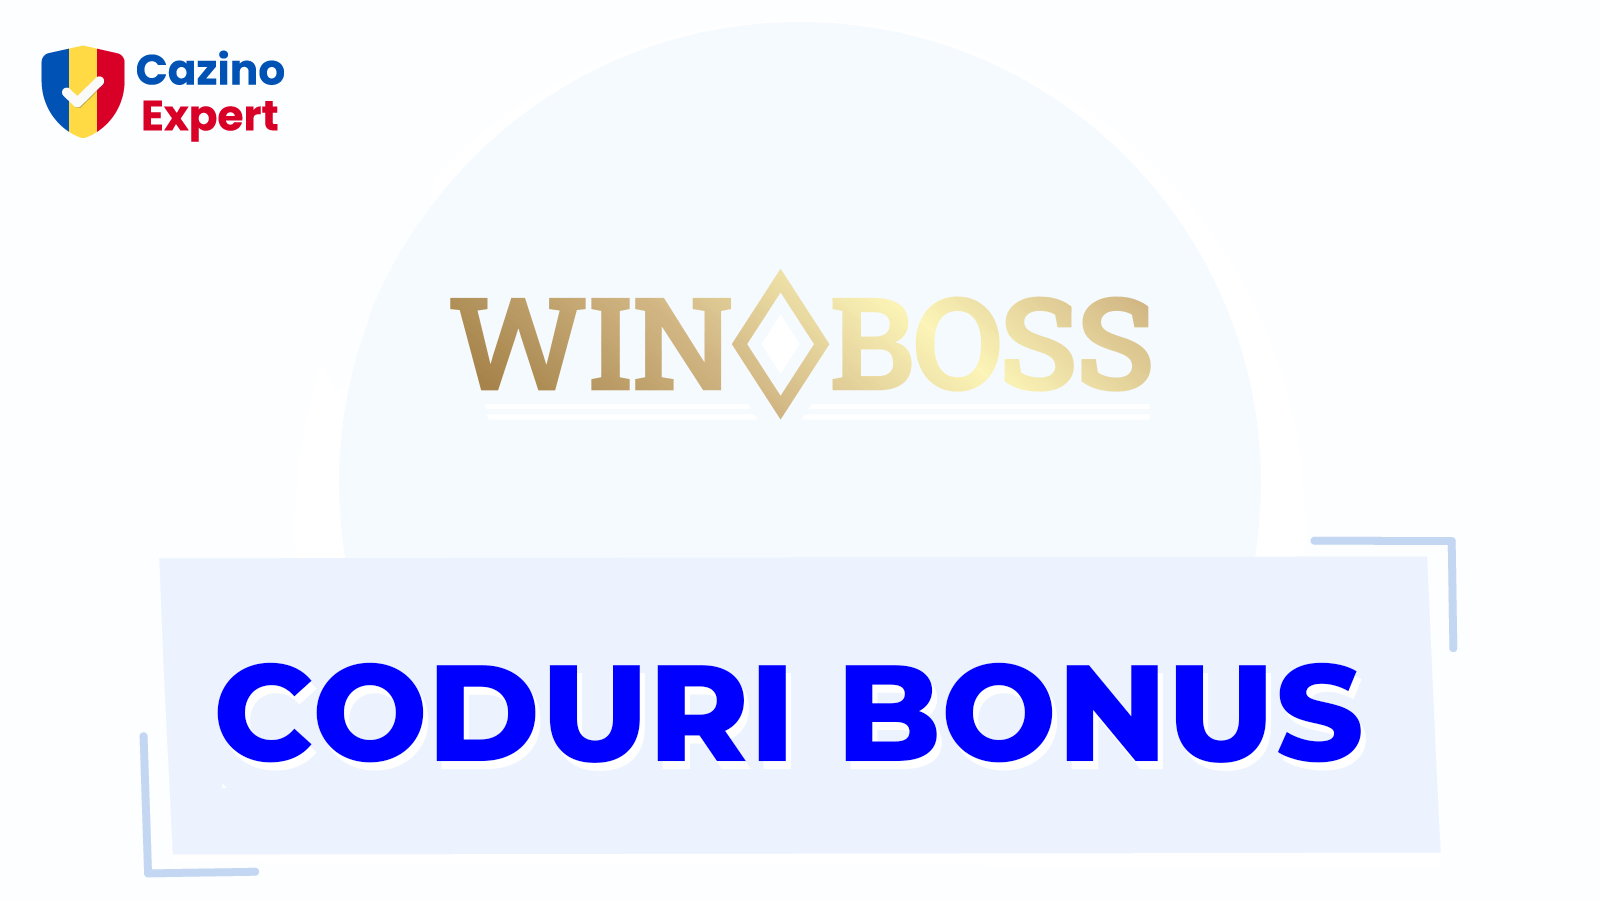 WinBoss Cod Bonus